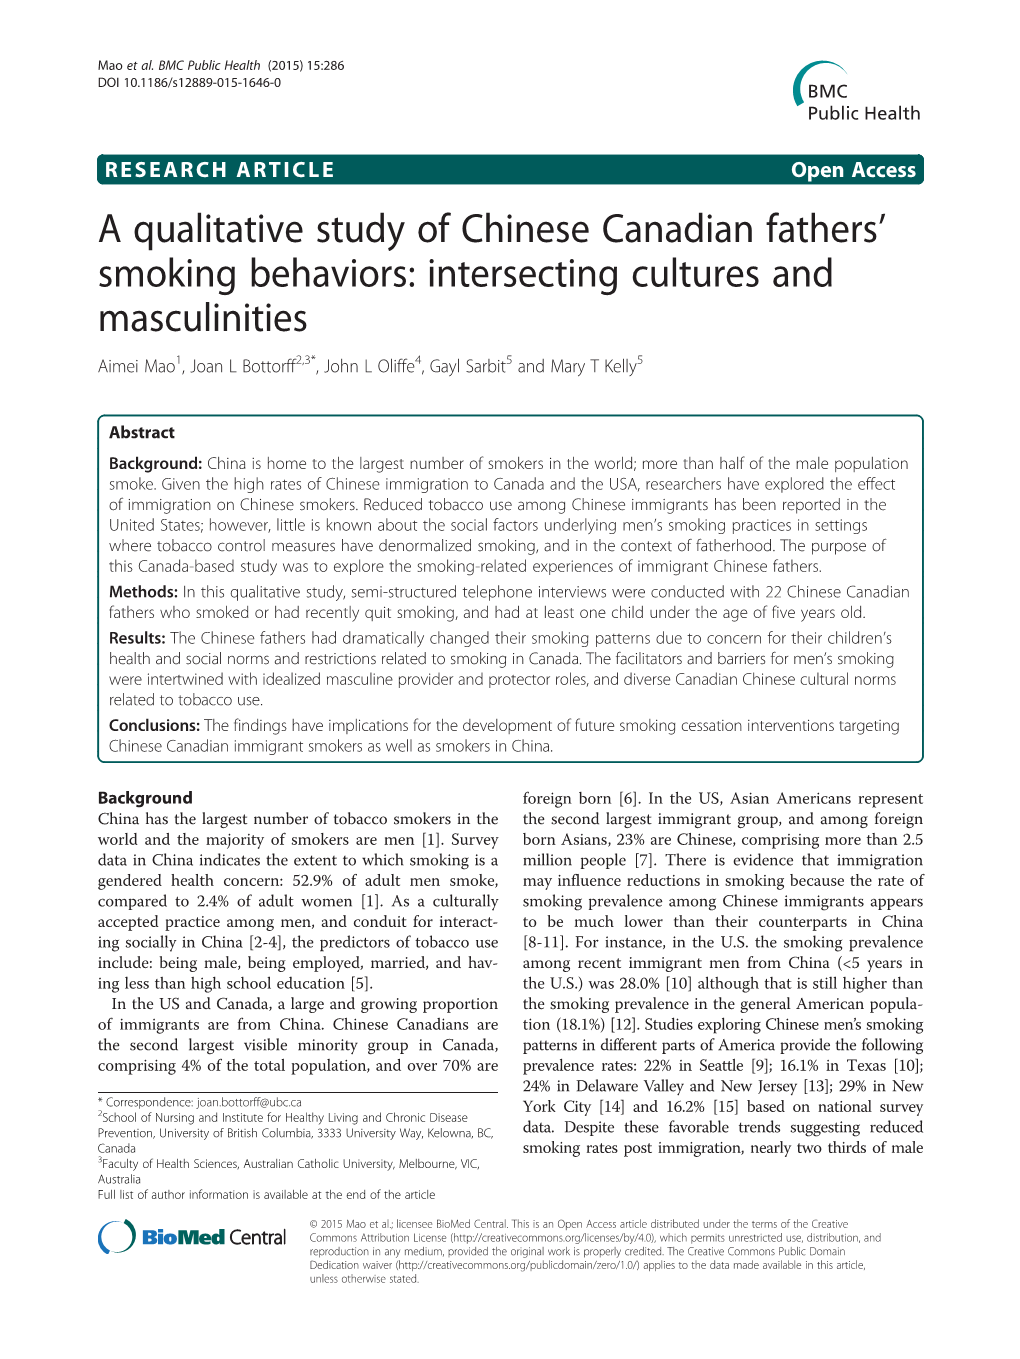 A Qualitative Study of Chinese Canadian Fathersł Smoking Behaviors